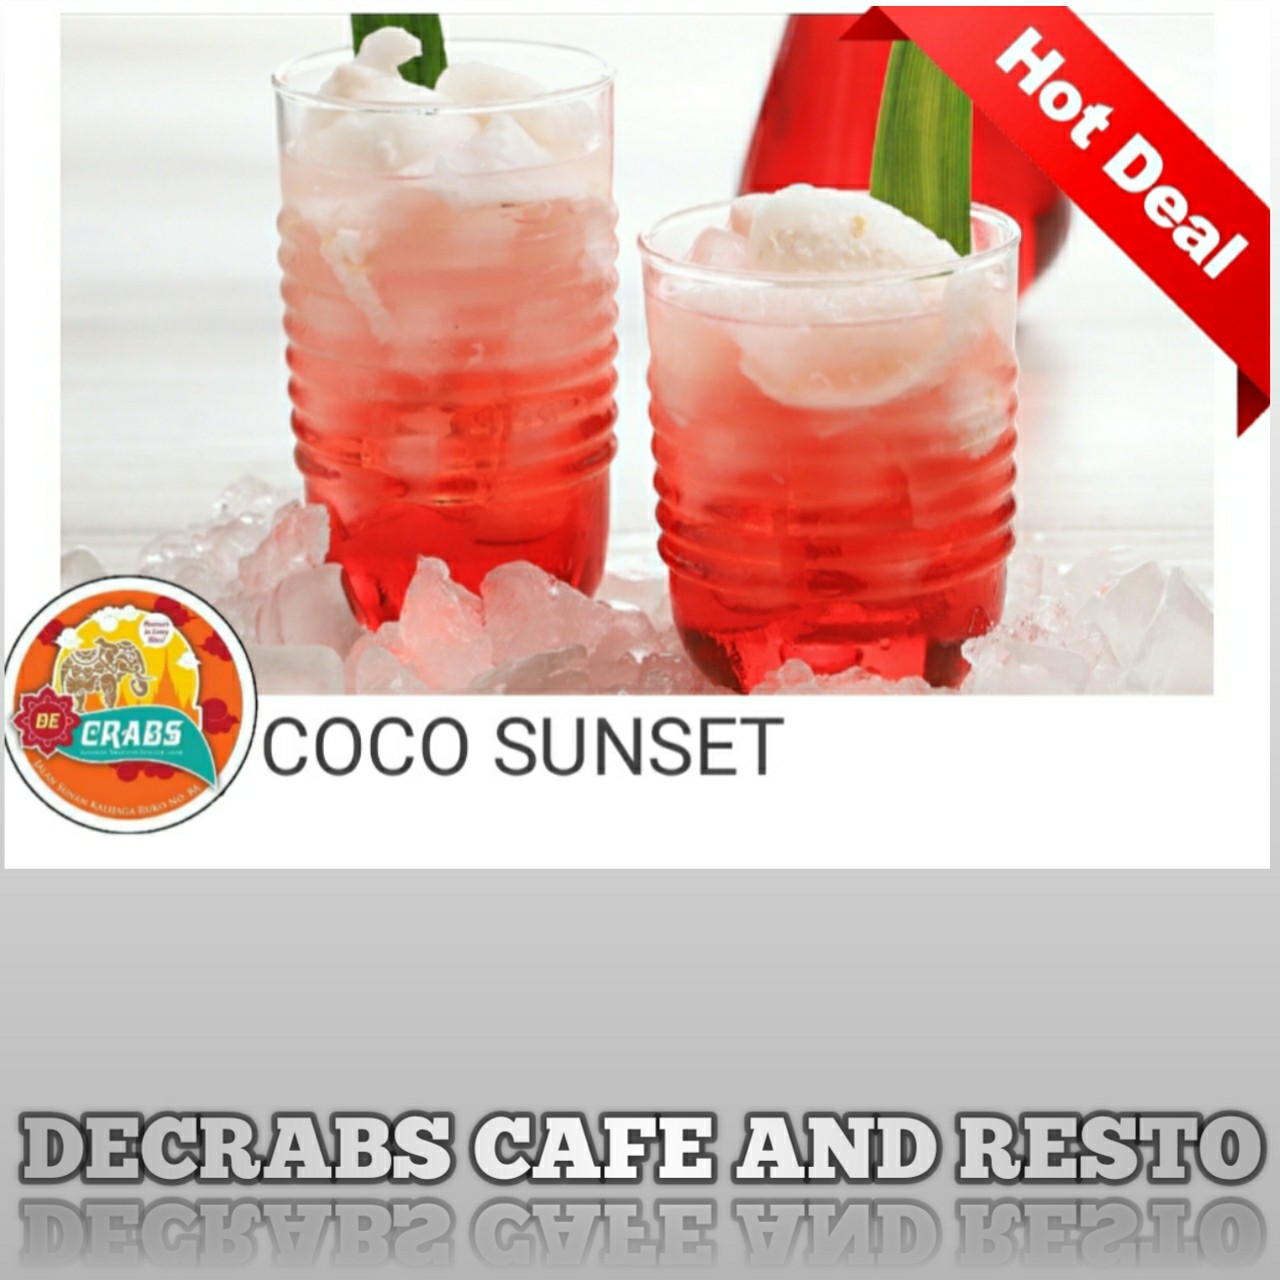 Coco Sunset